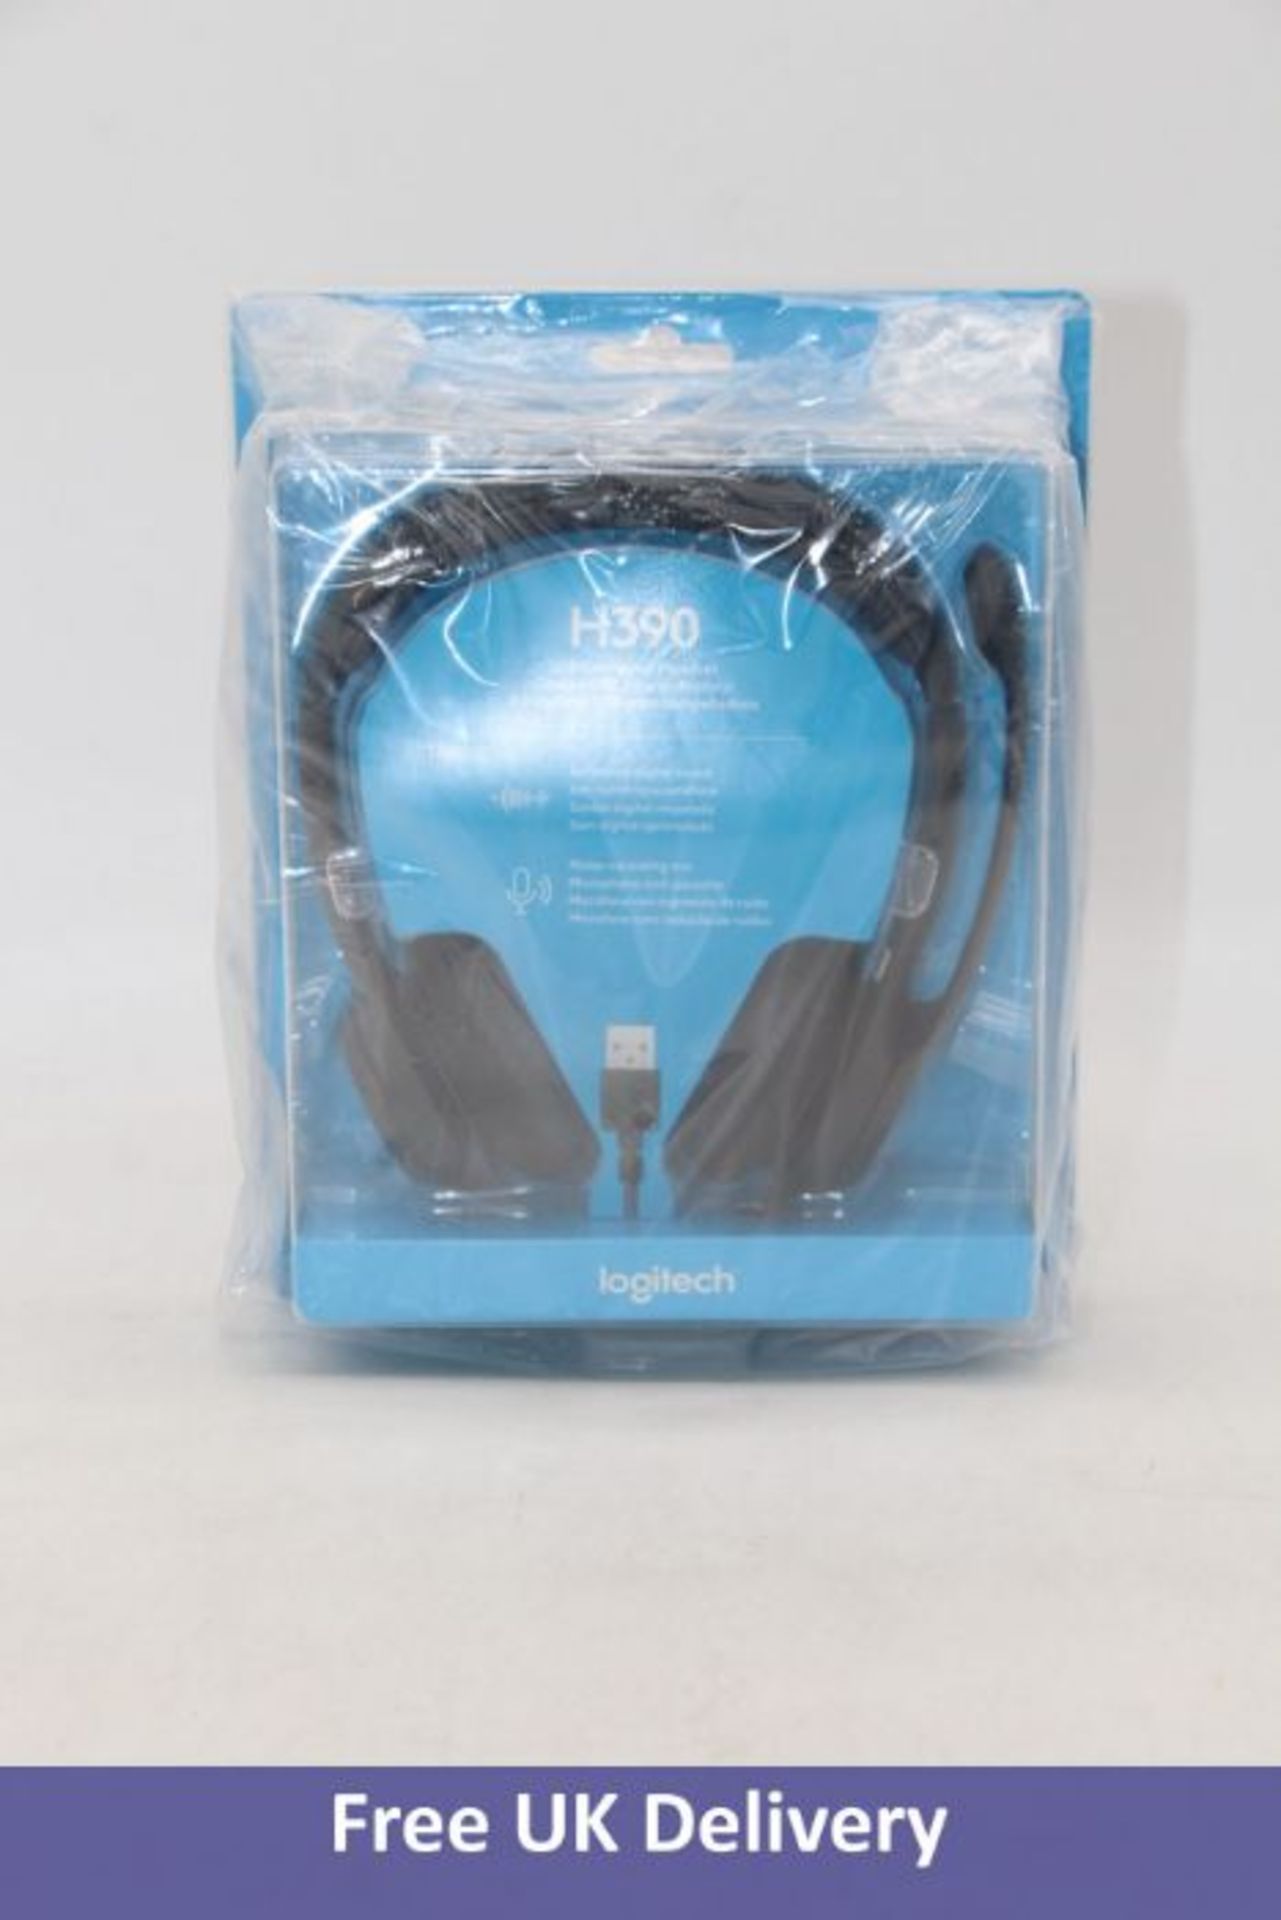 Twenty-five pairs of Logitech H390 Headphones